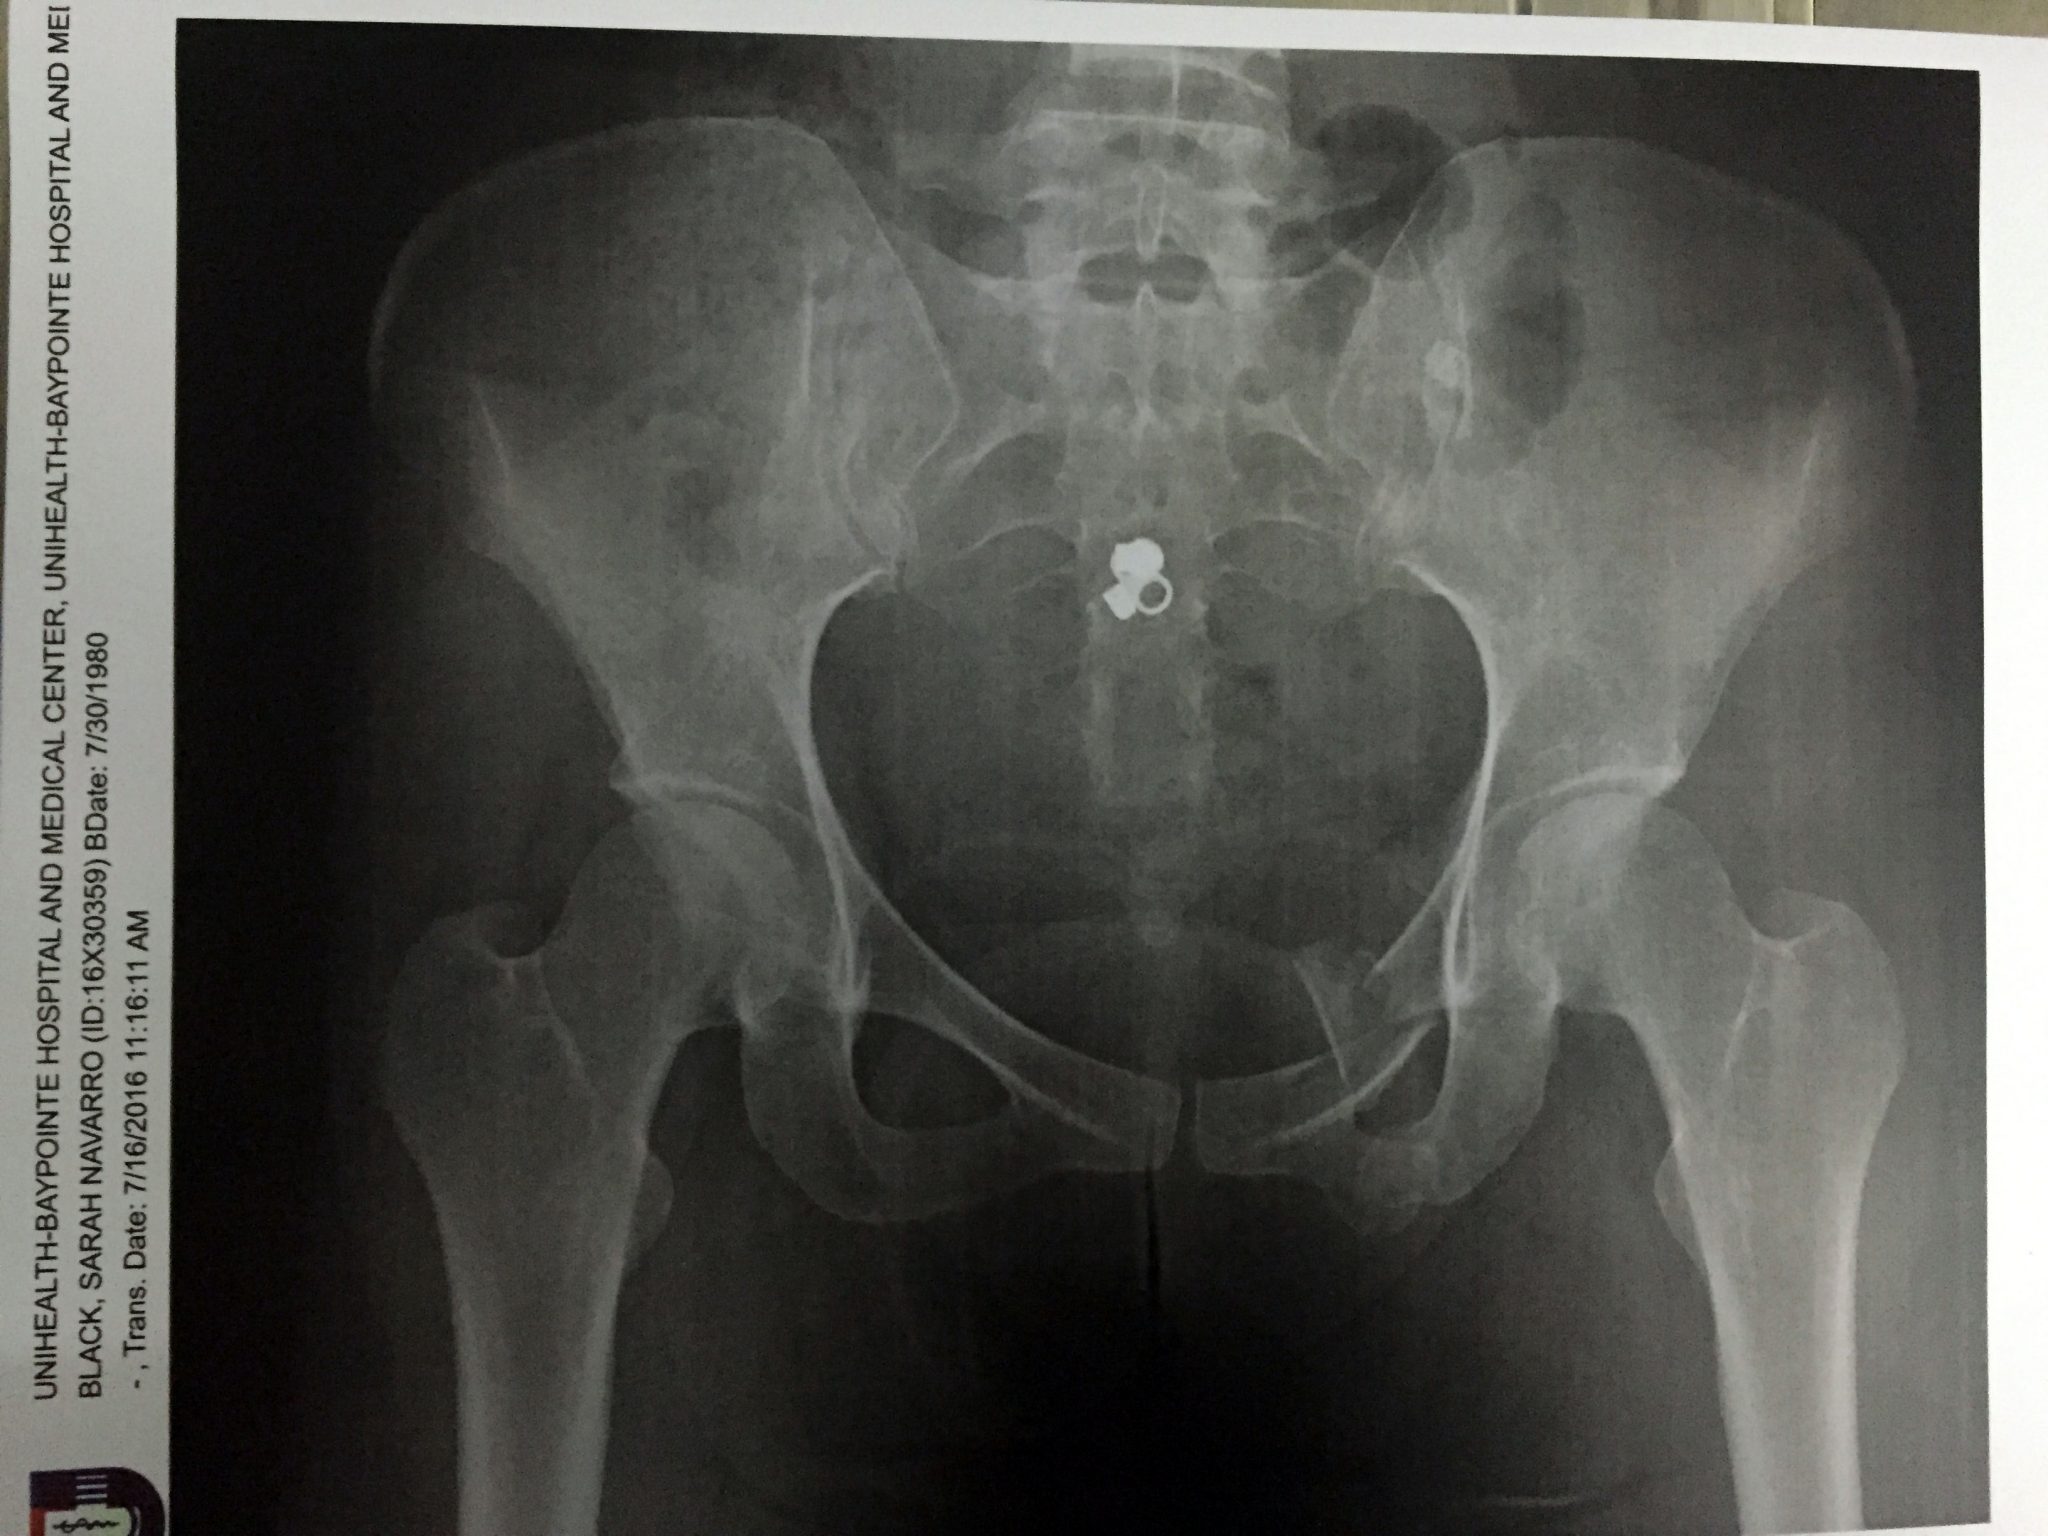 A scan of Sara Black's hip